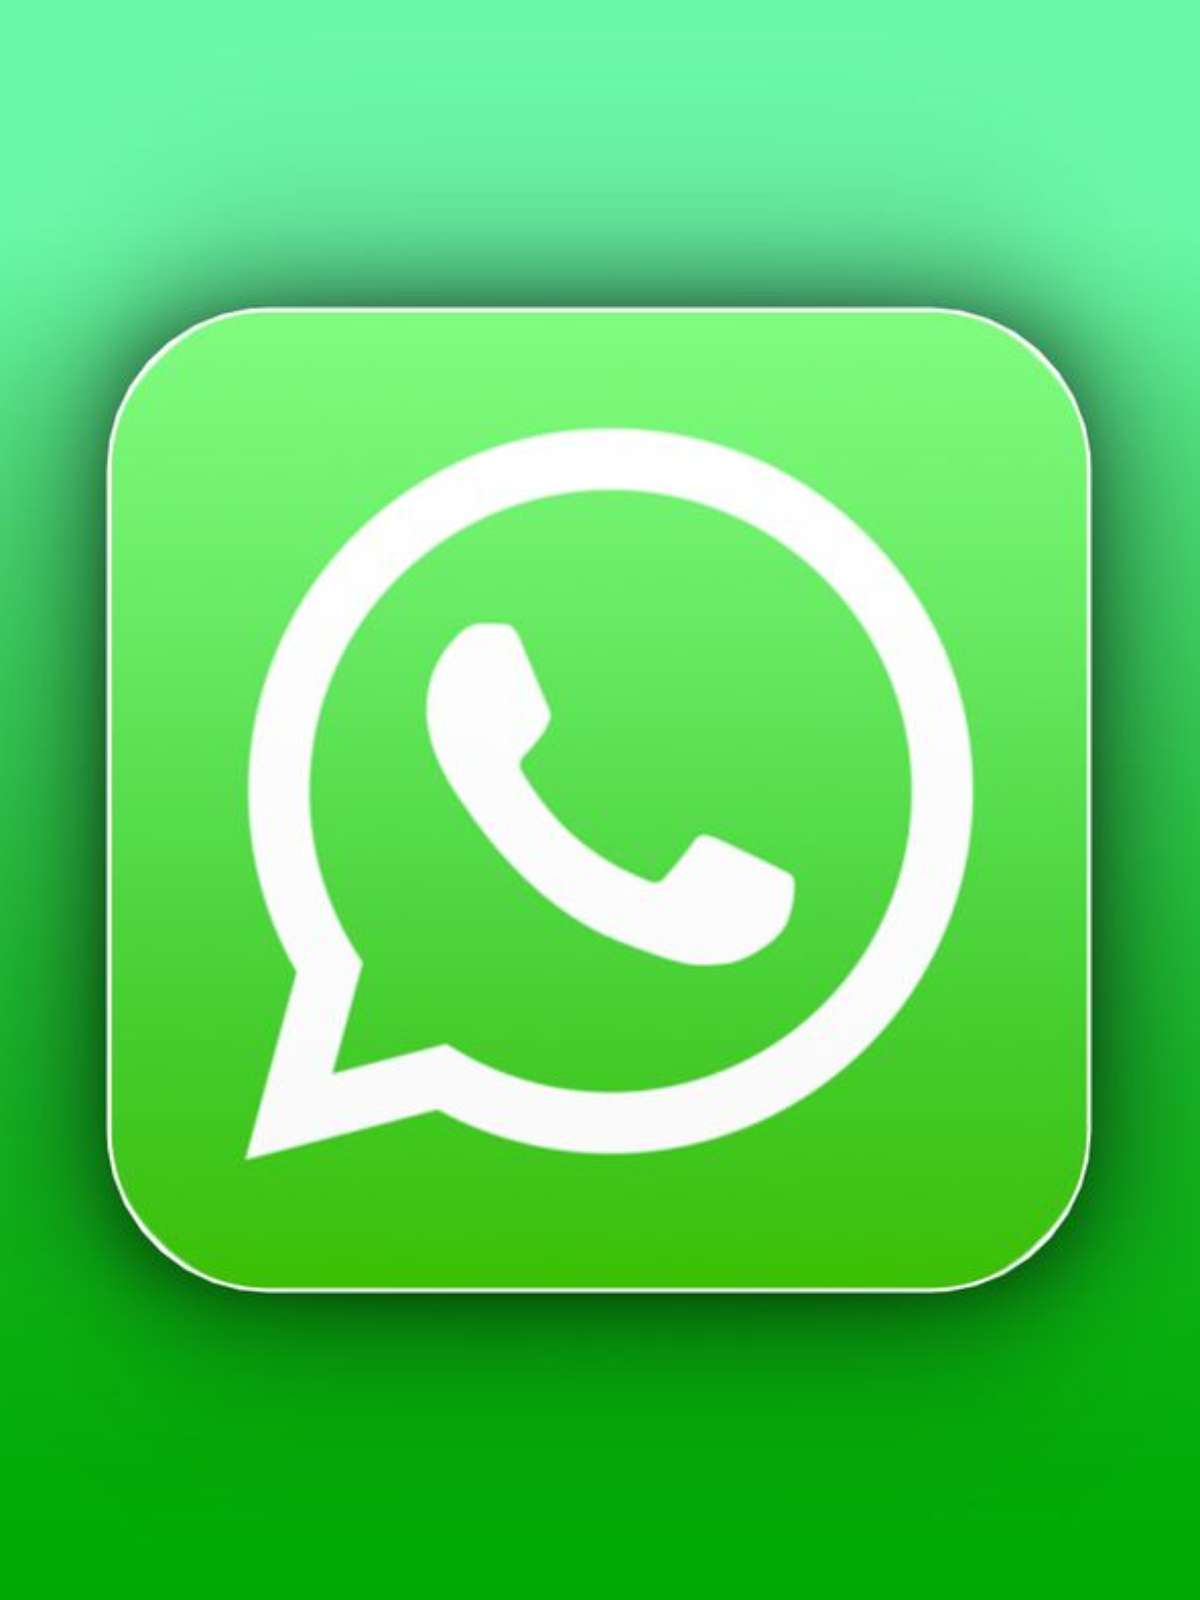 TecMundo agora tem grupo no WhatsApp e Telegram; participe! - TecMundo